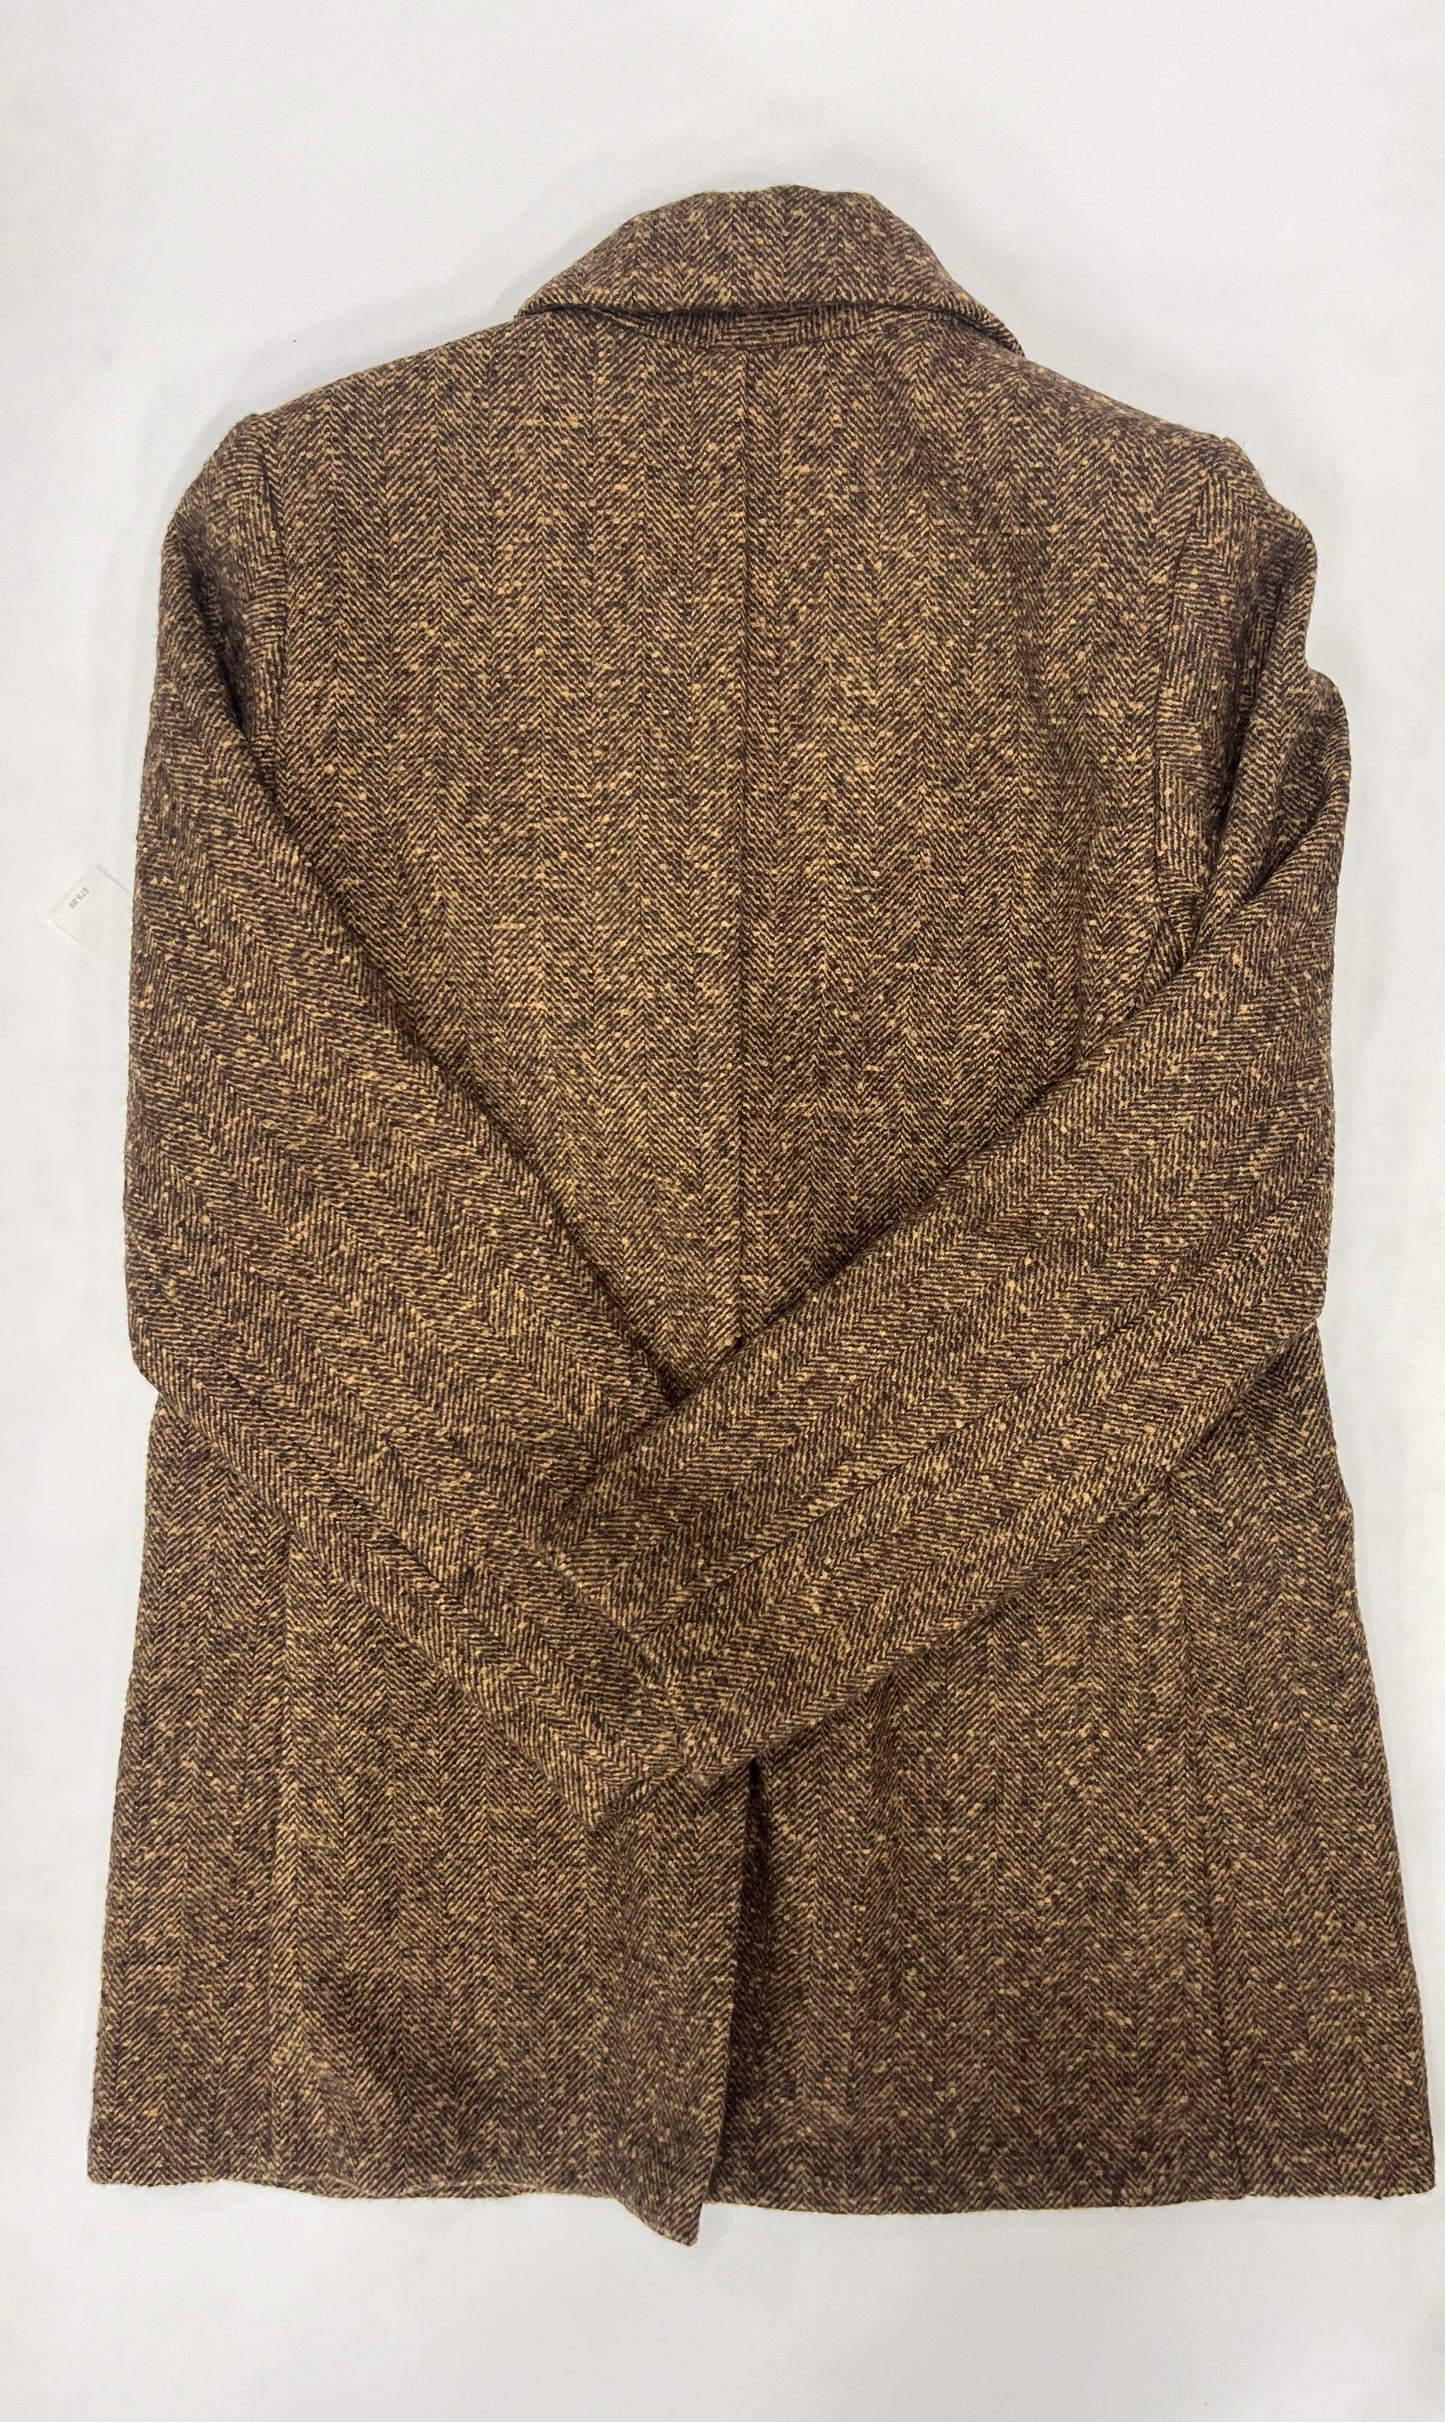 Coat Peacoat By Old Navy NWT  Size: S